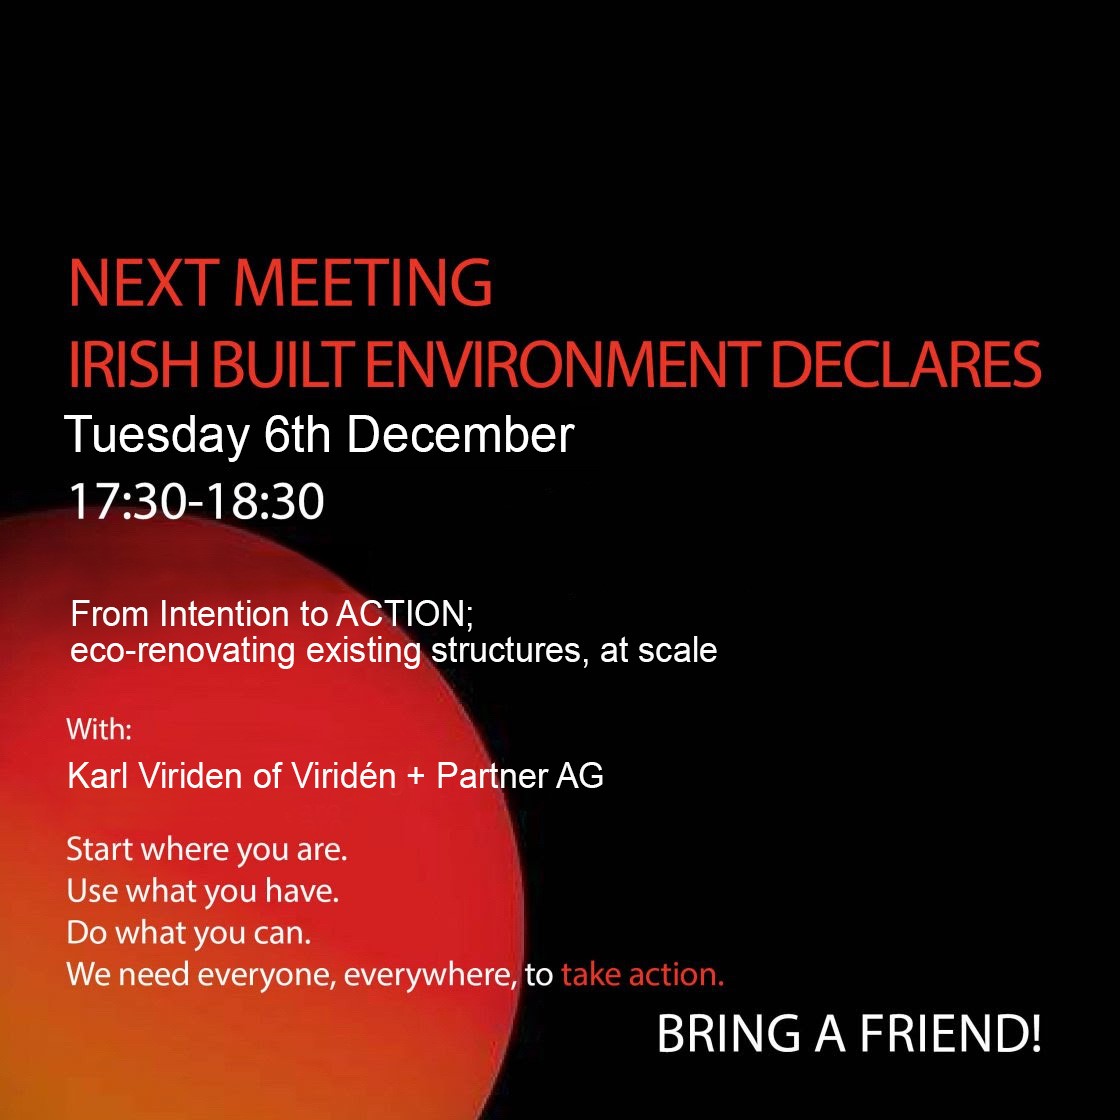 Irish Built Environment Declares December Meeting